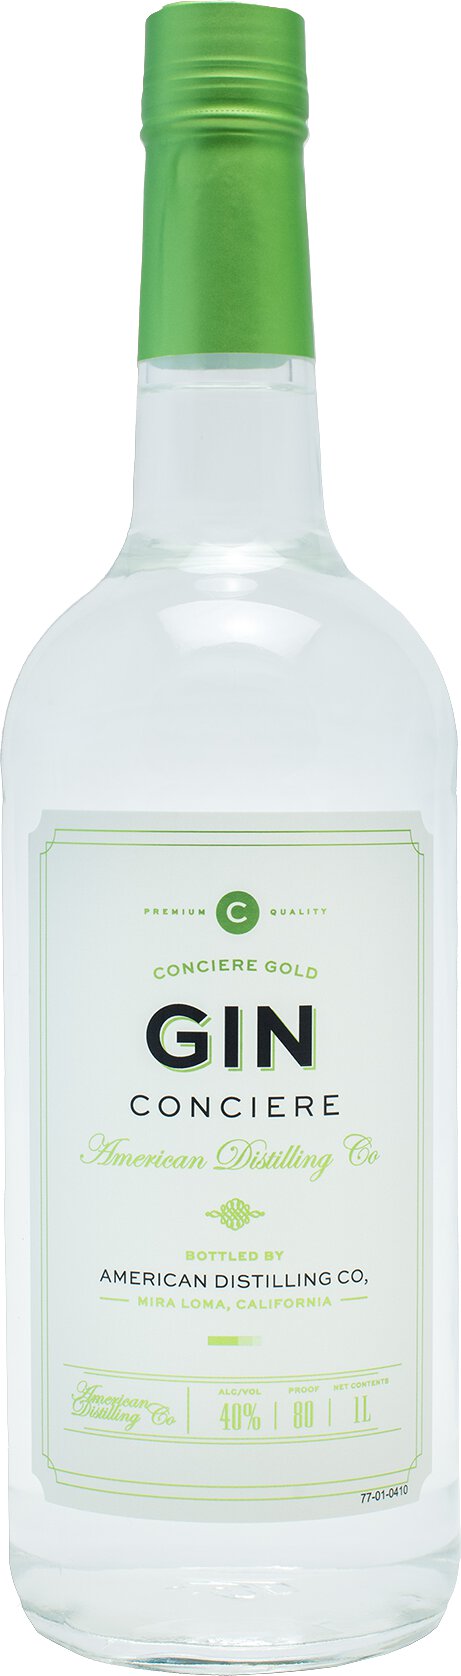 Conciere Gin